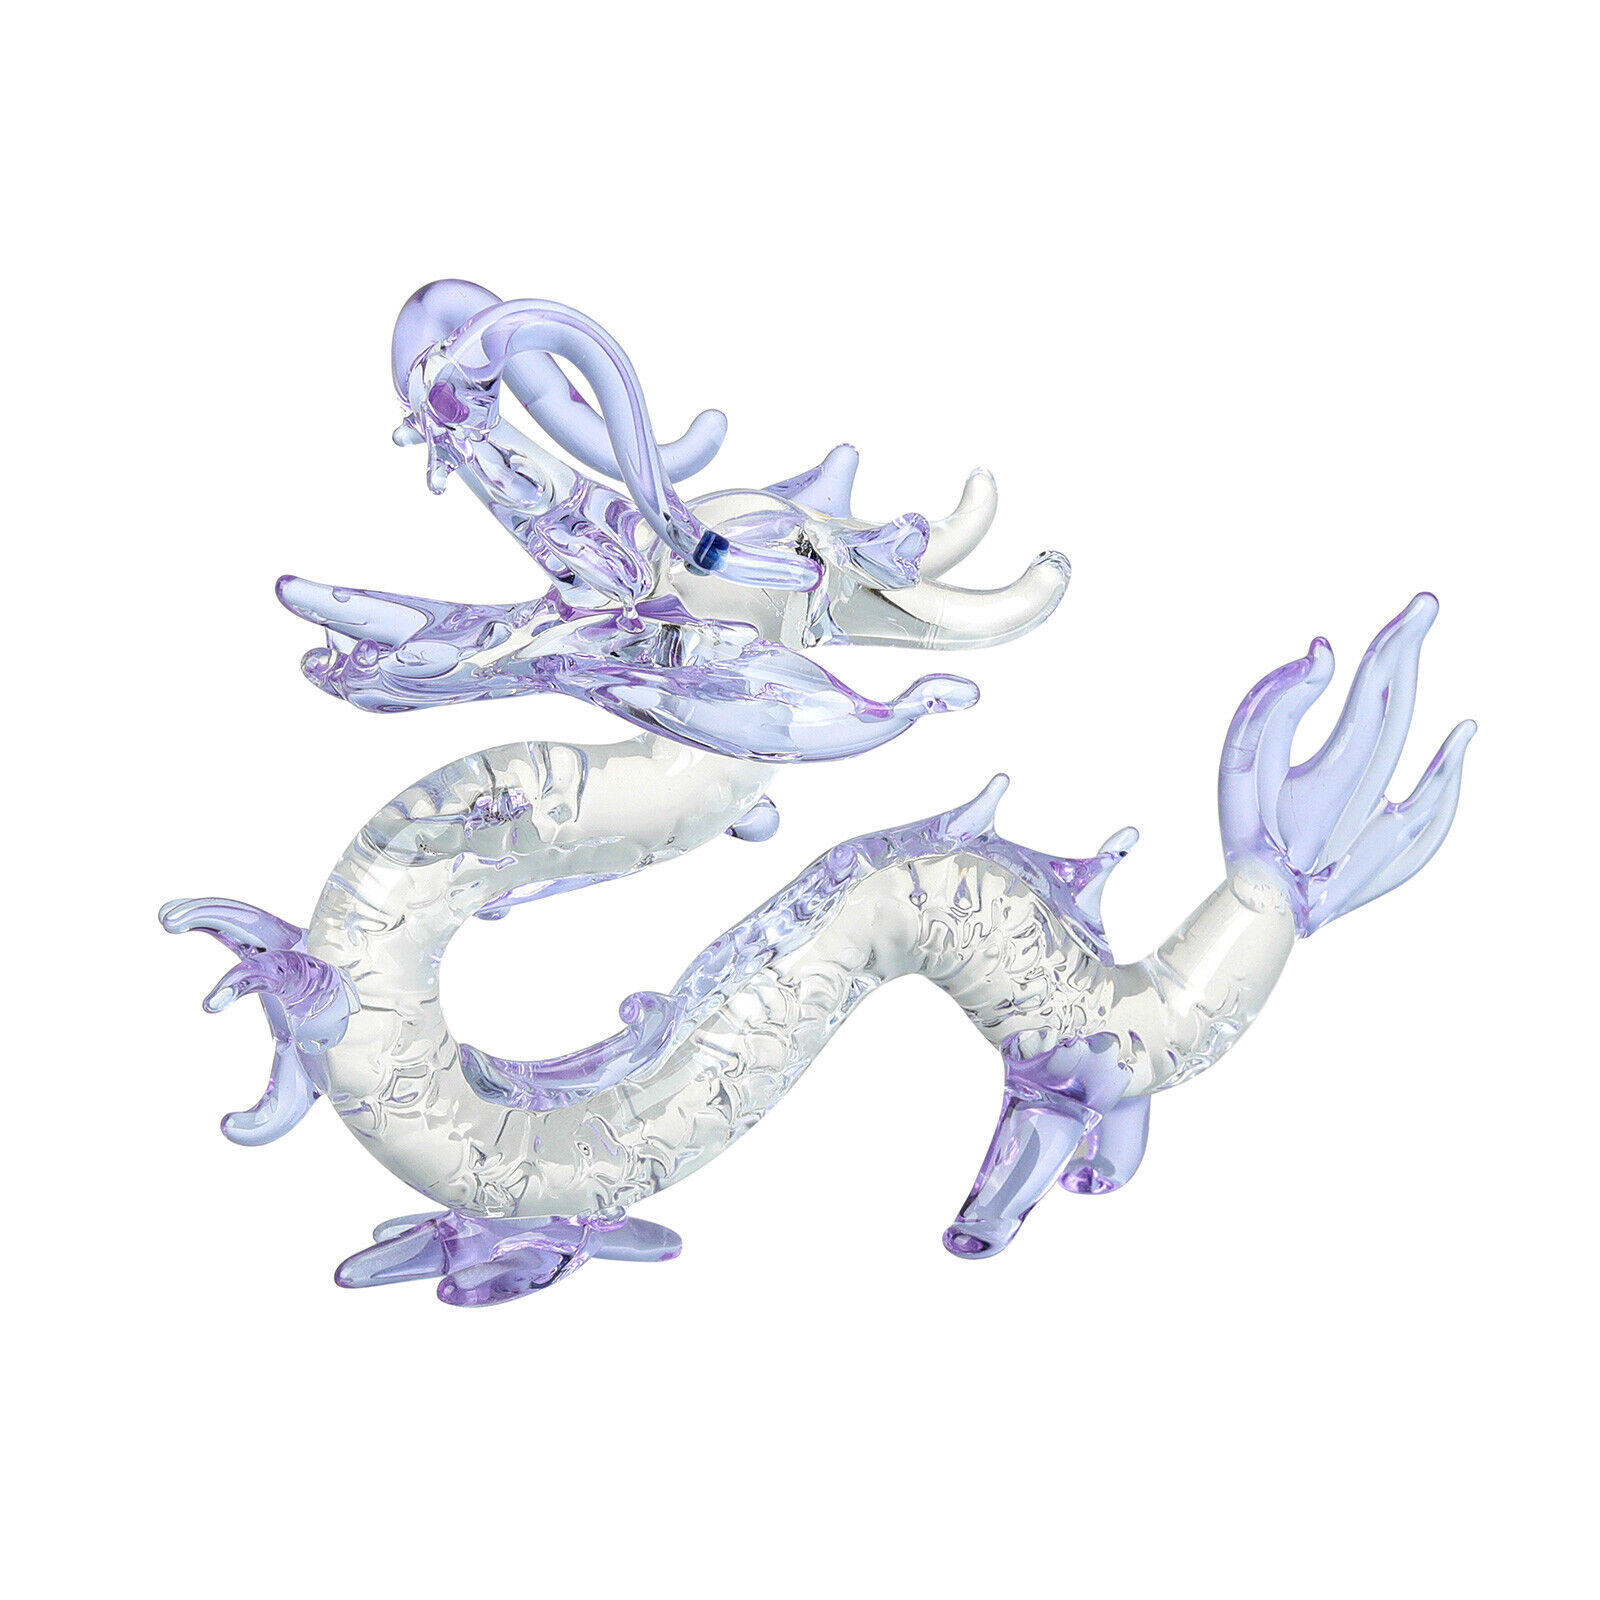 Purple Crystal Dragon Figurine Collectible Hand Blown Glass Animal Ornament Gift